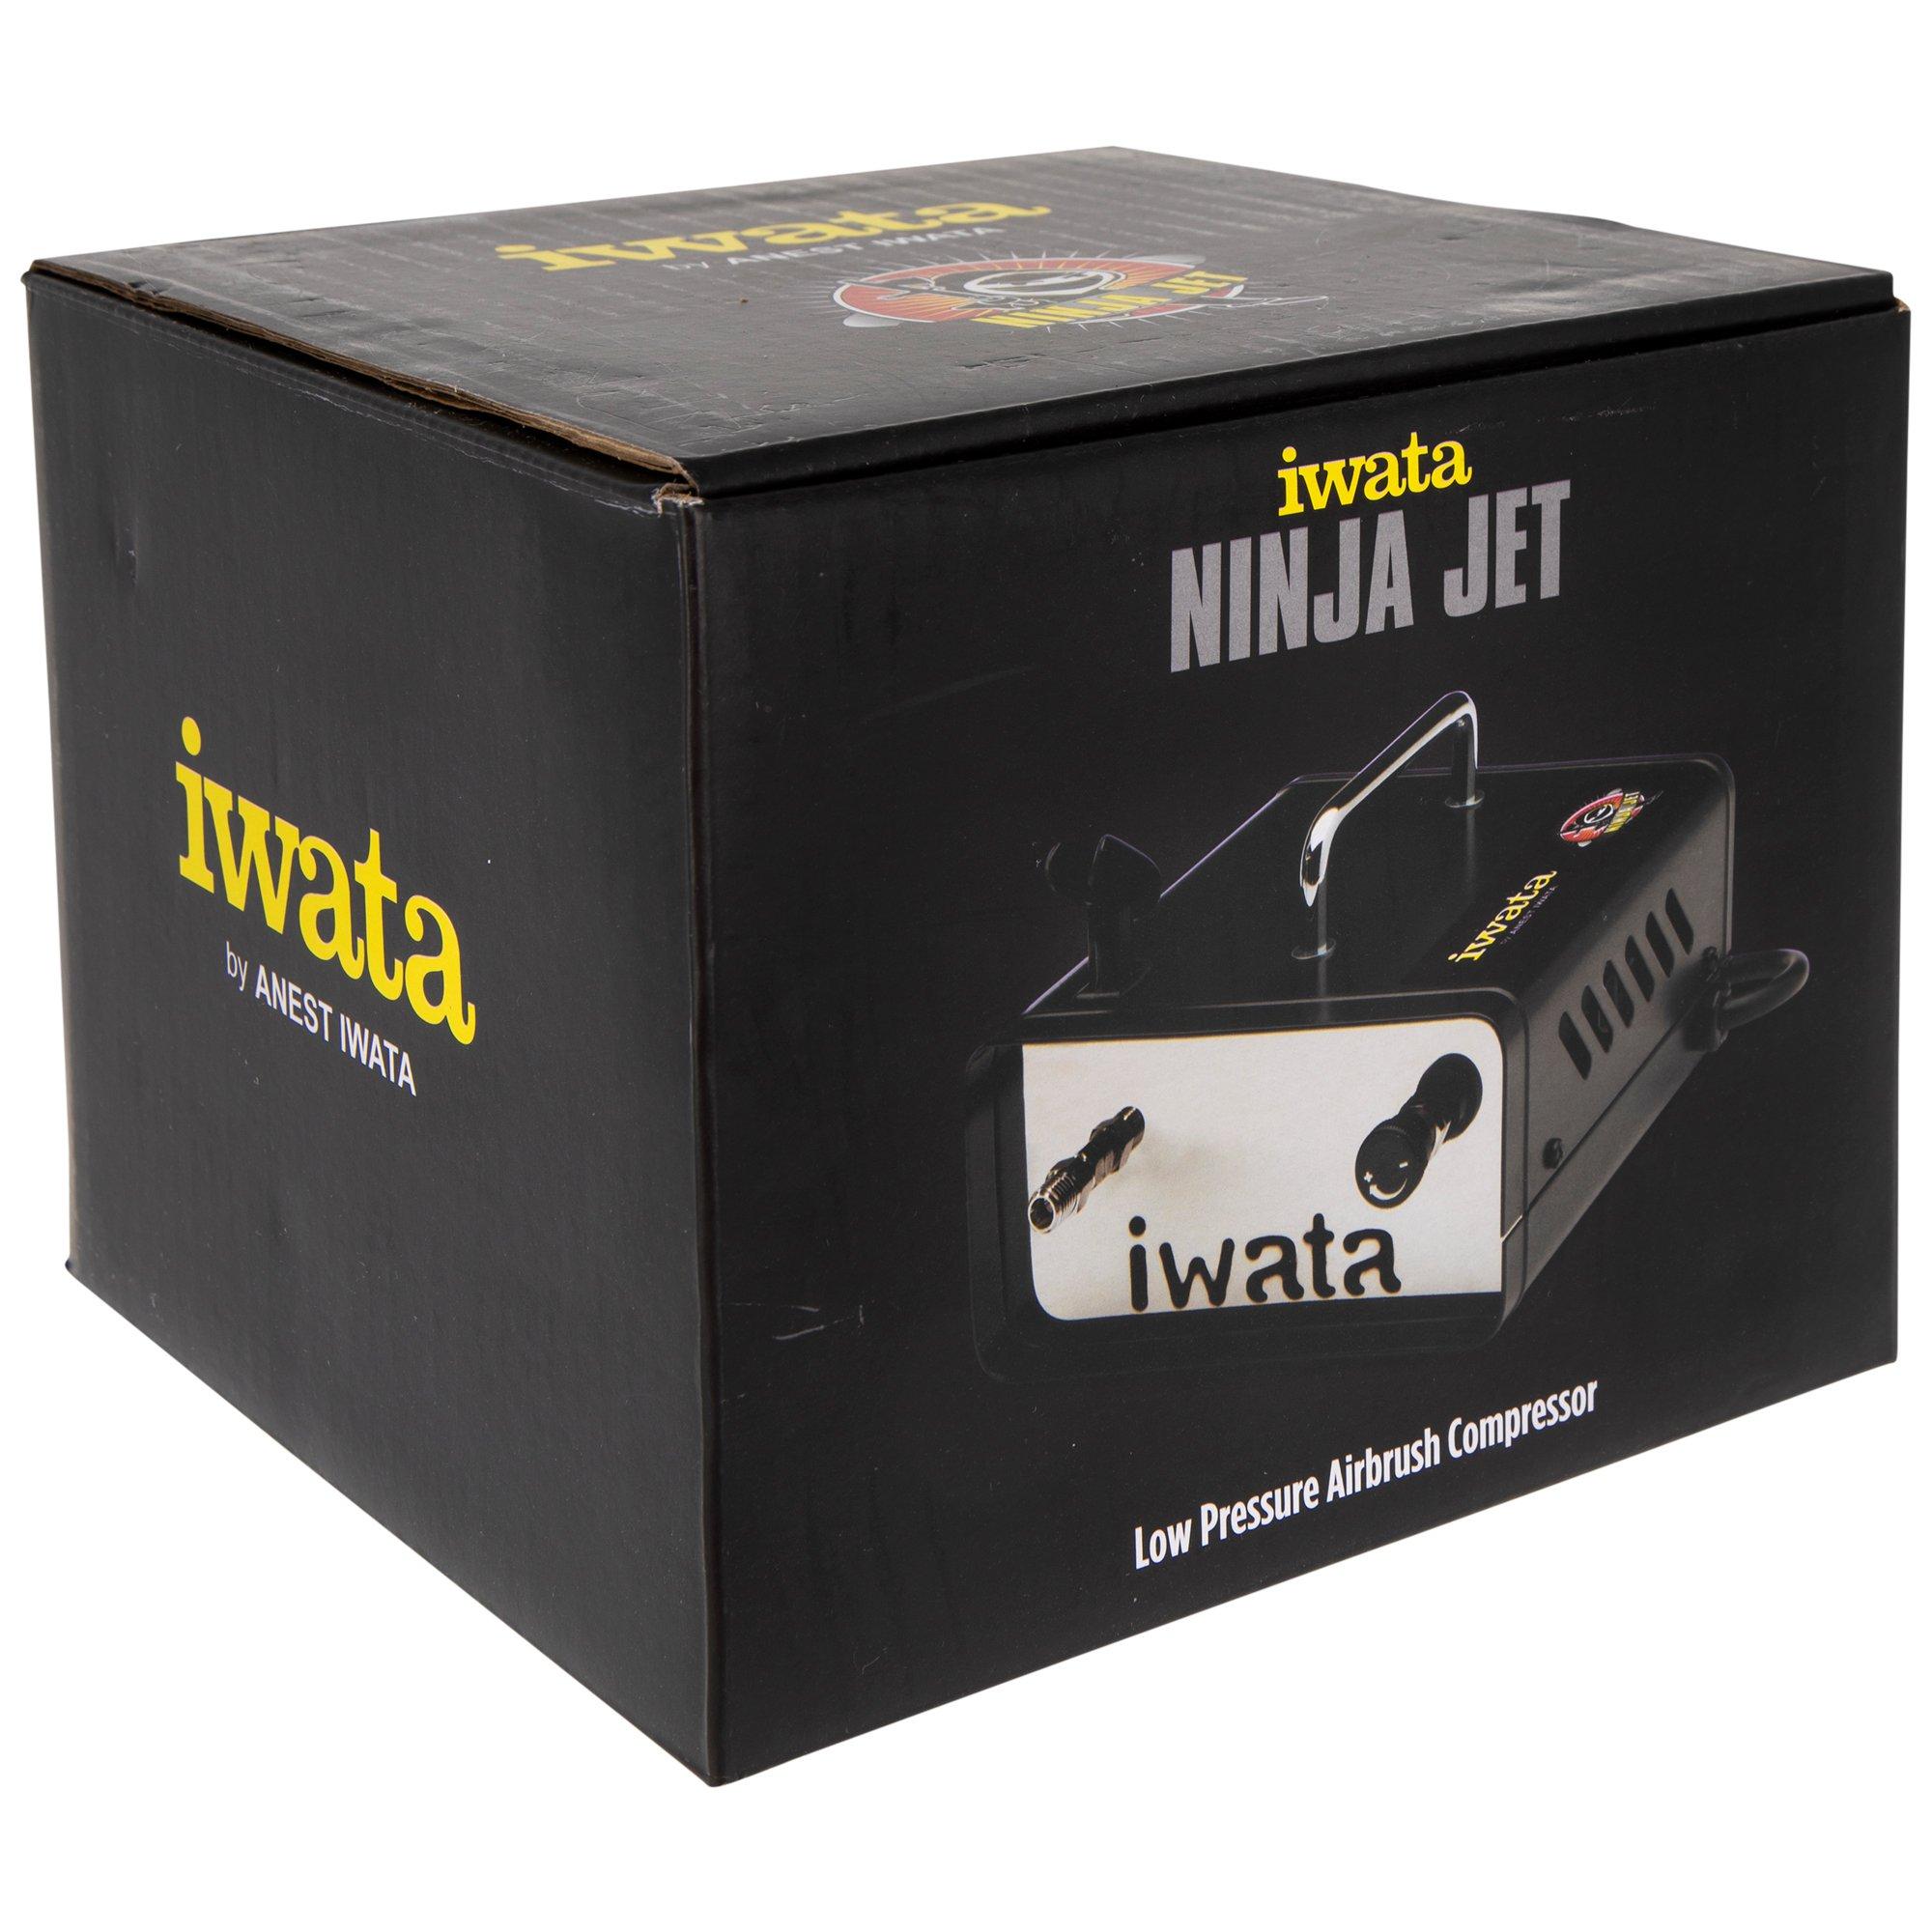 Iwata-Medea IS-35 Ninja Jet Studio Series Airbrush Compressor